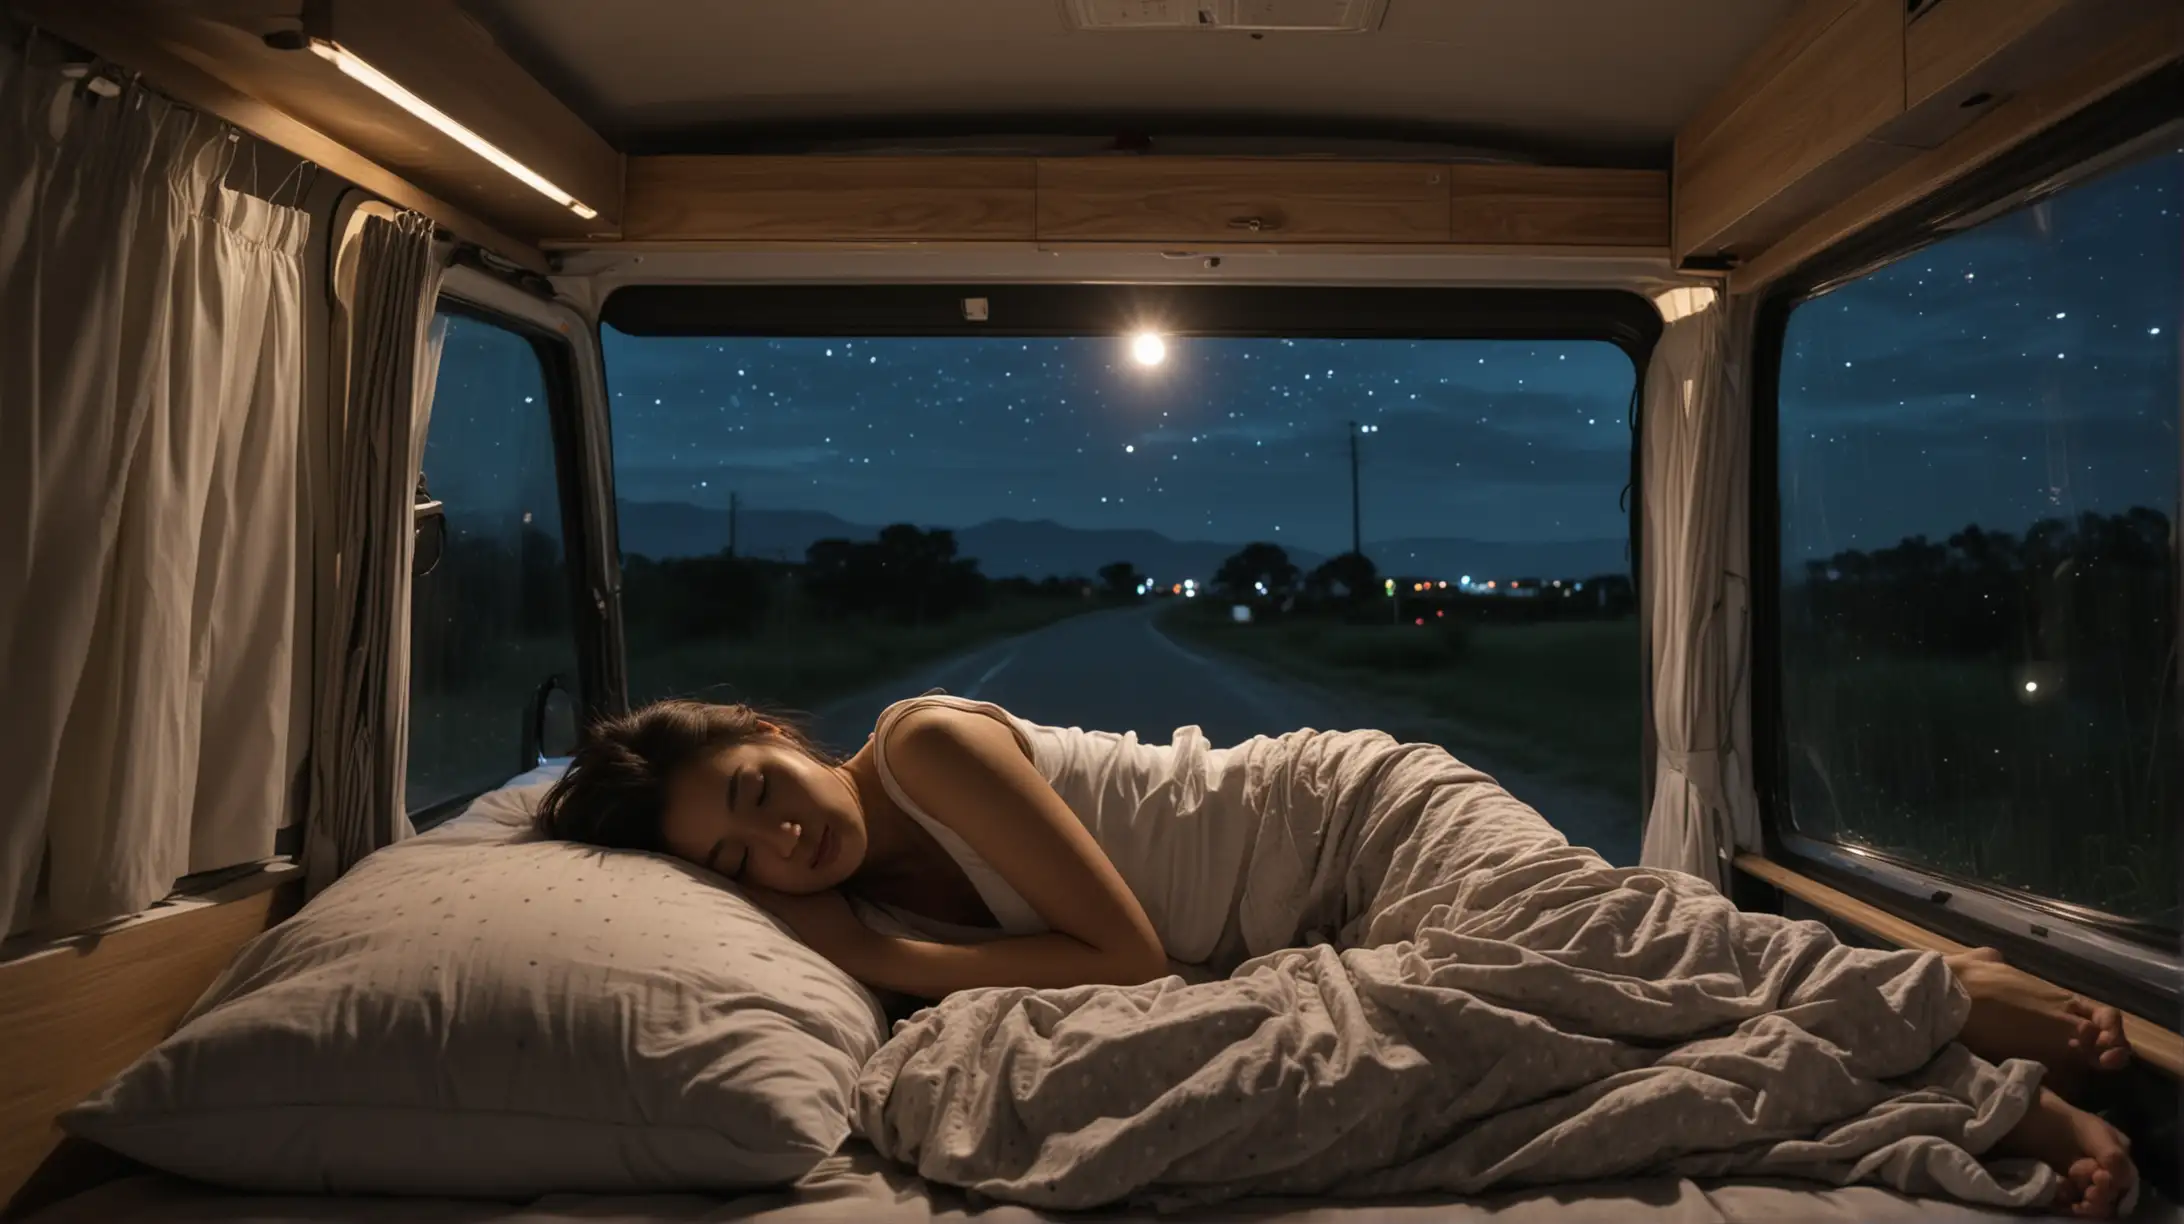 Tranquil Asian Woman Sleeping in Camper Van at Night